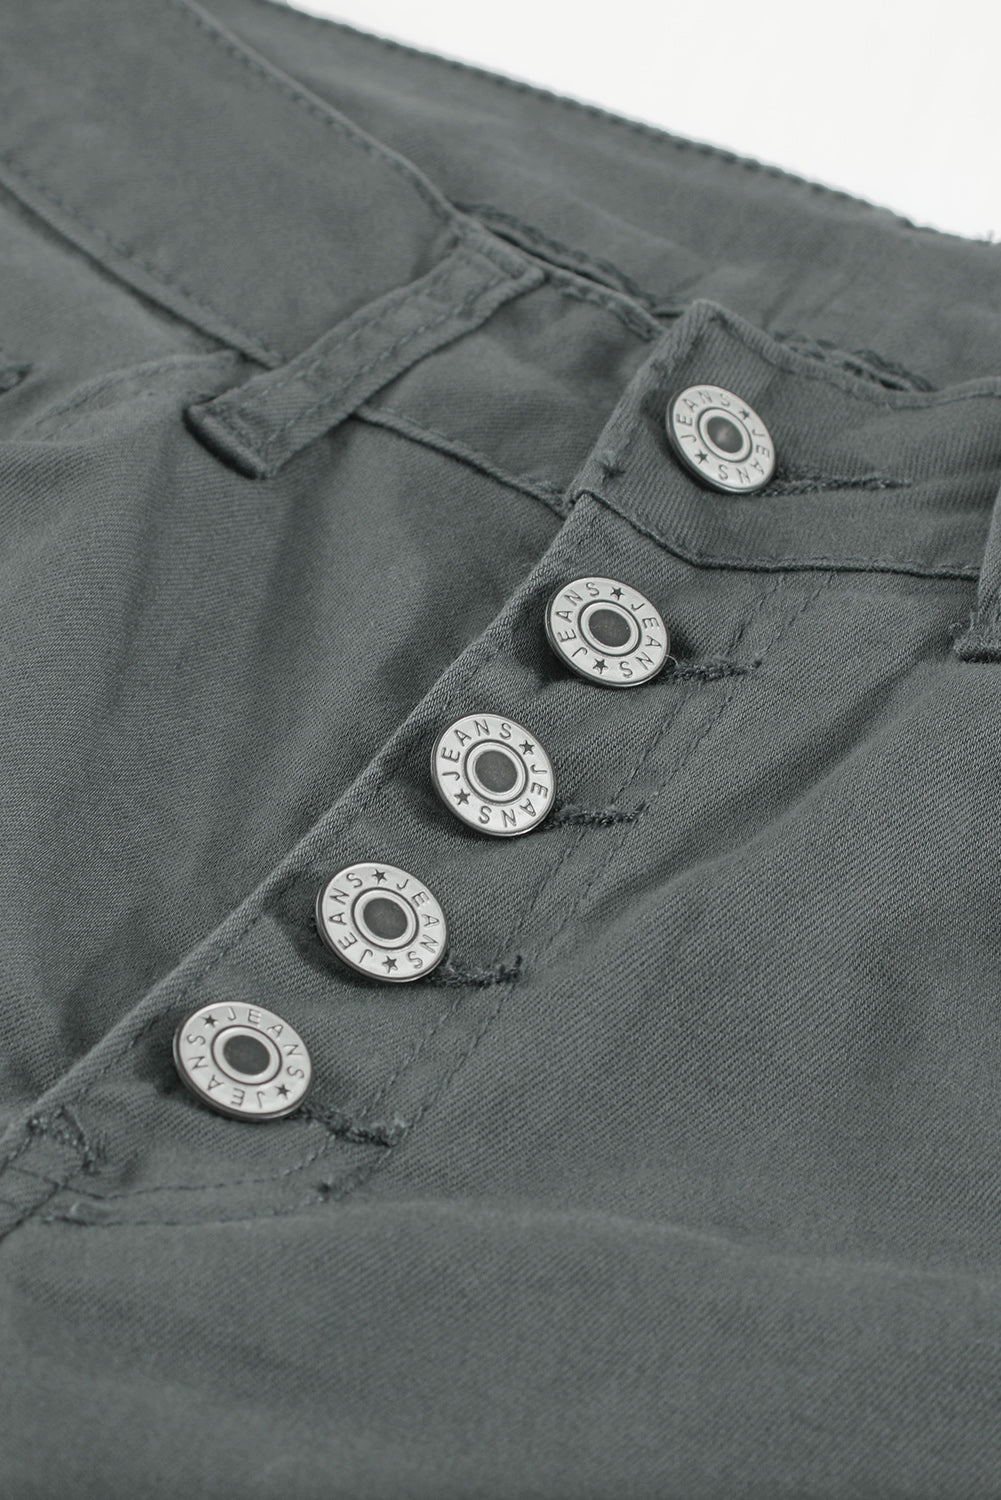 Button Fly Hem Detail Skinny Jeans - Girl Code